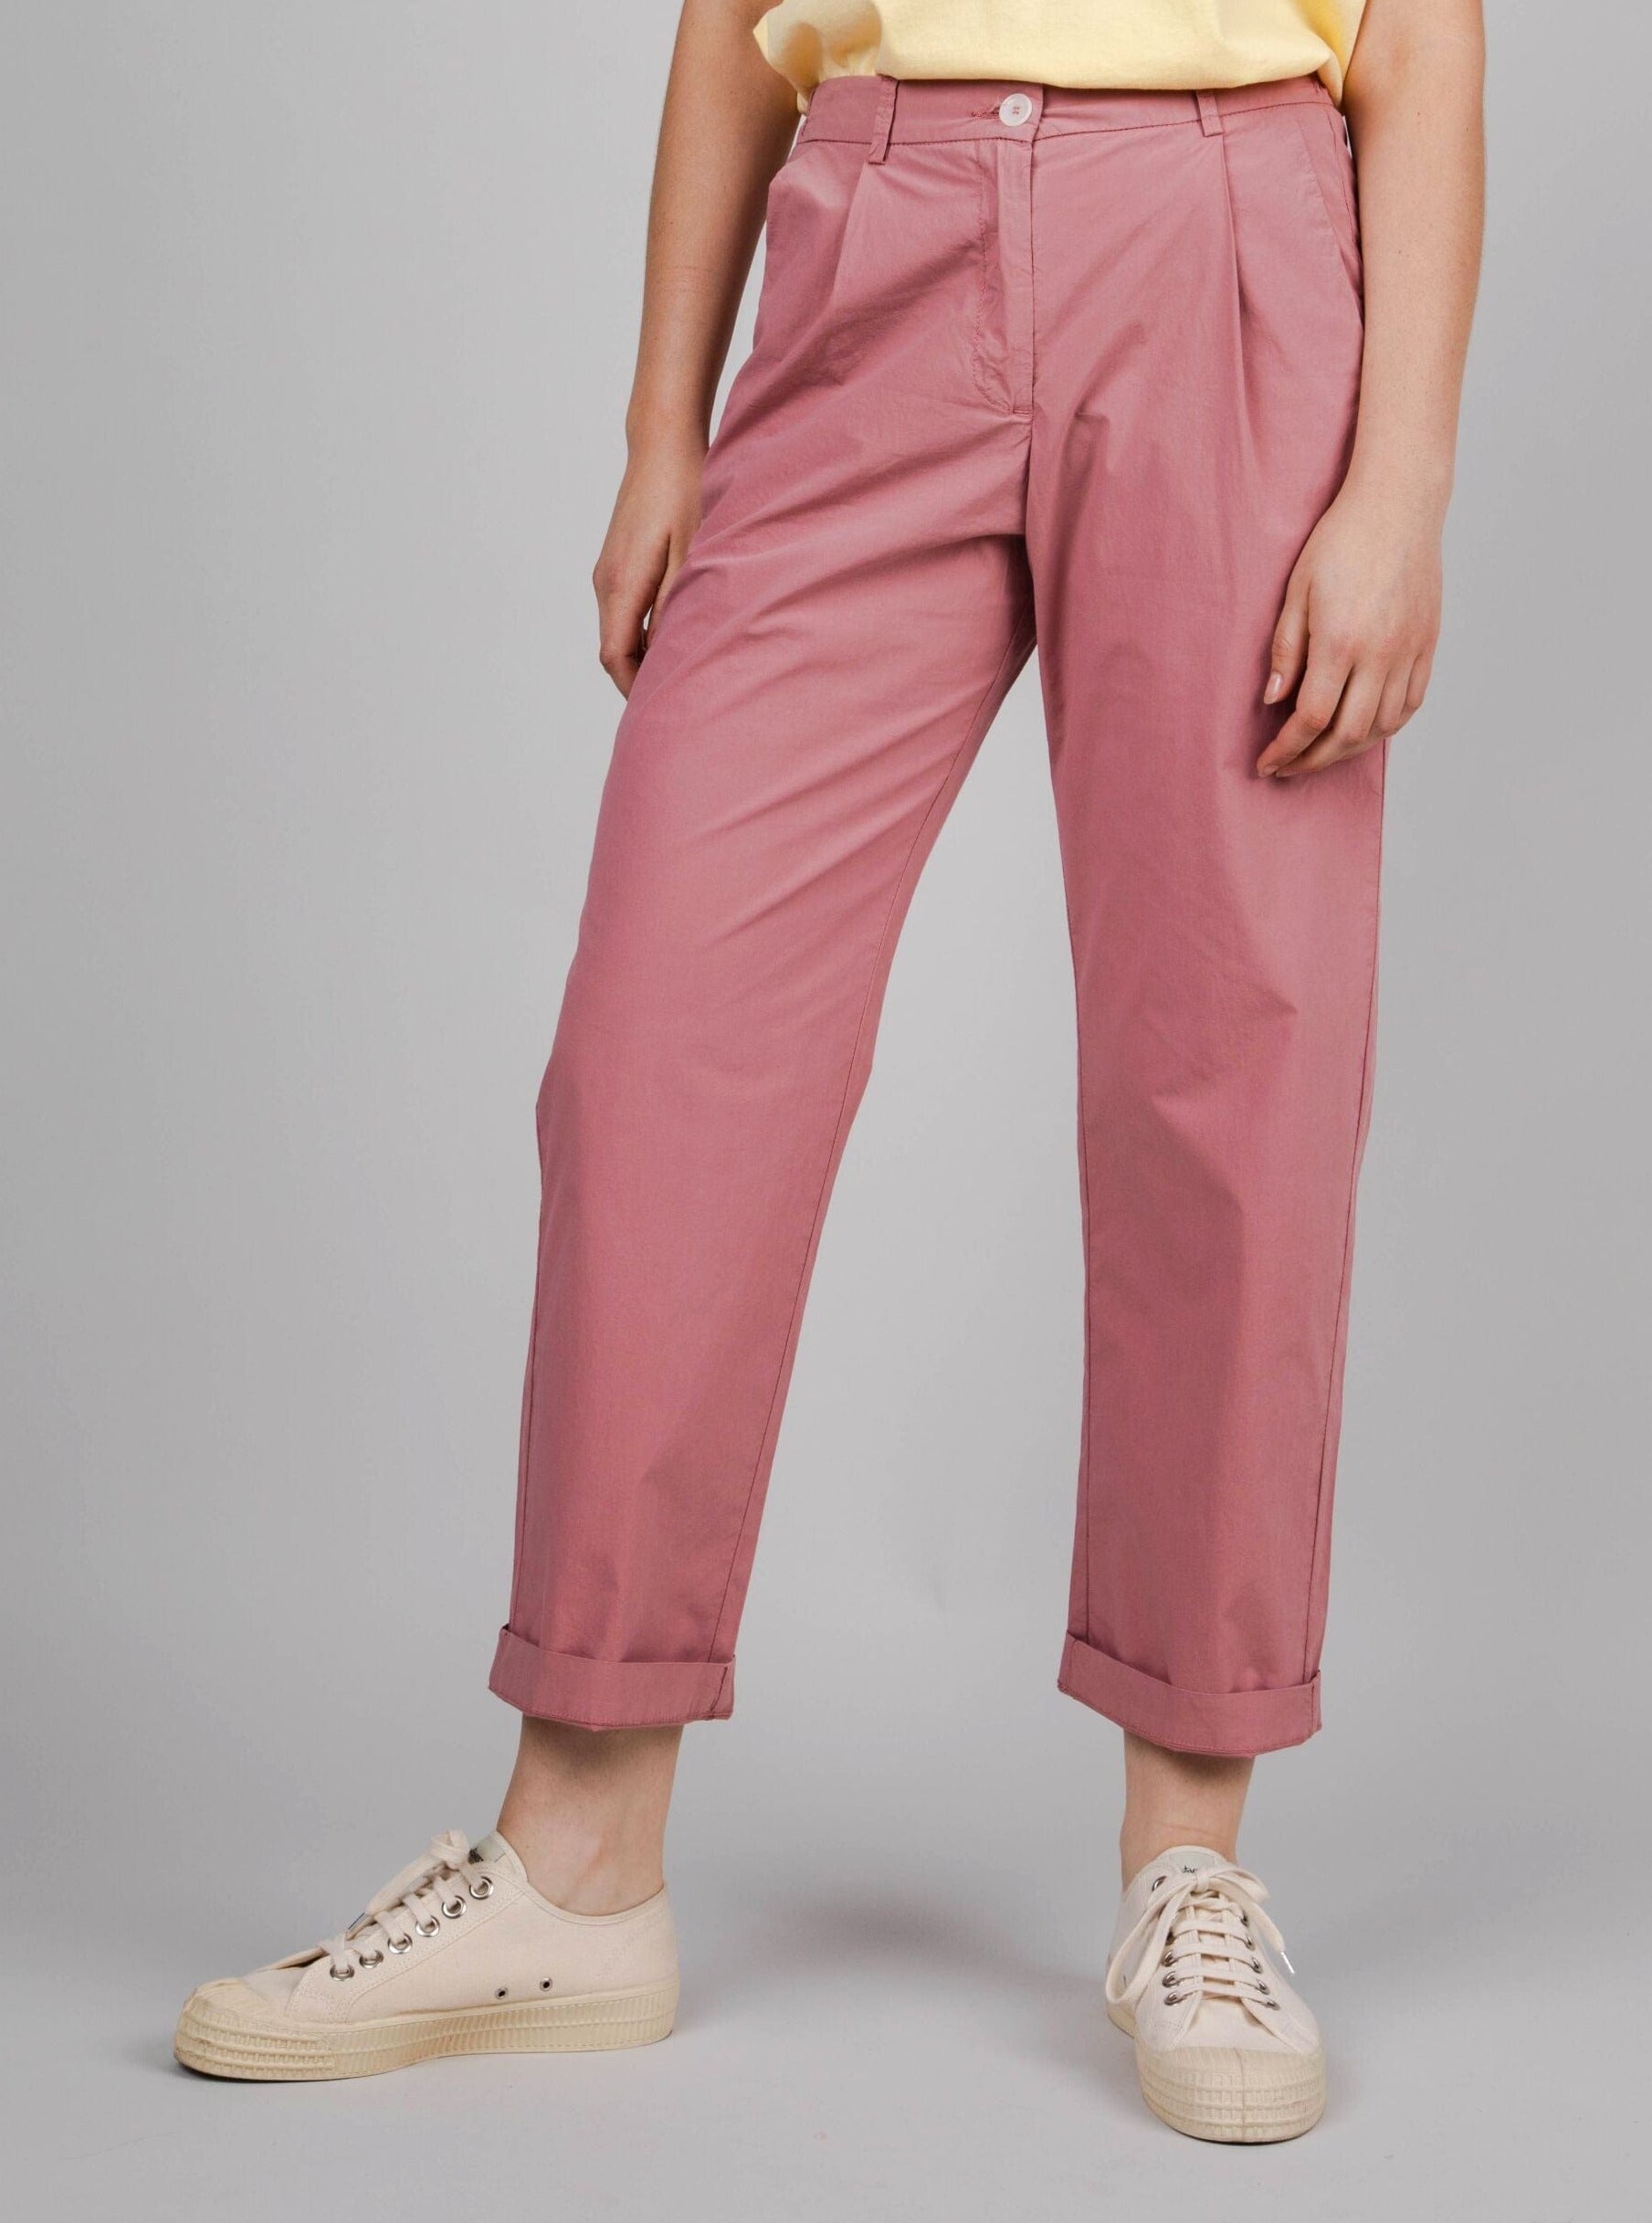 Brava Fabrics pantalón 46 Chino Elástico Plisado de Algodón Orgánico moda sostenible moda ética